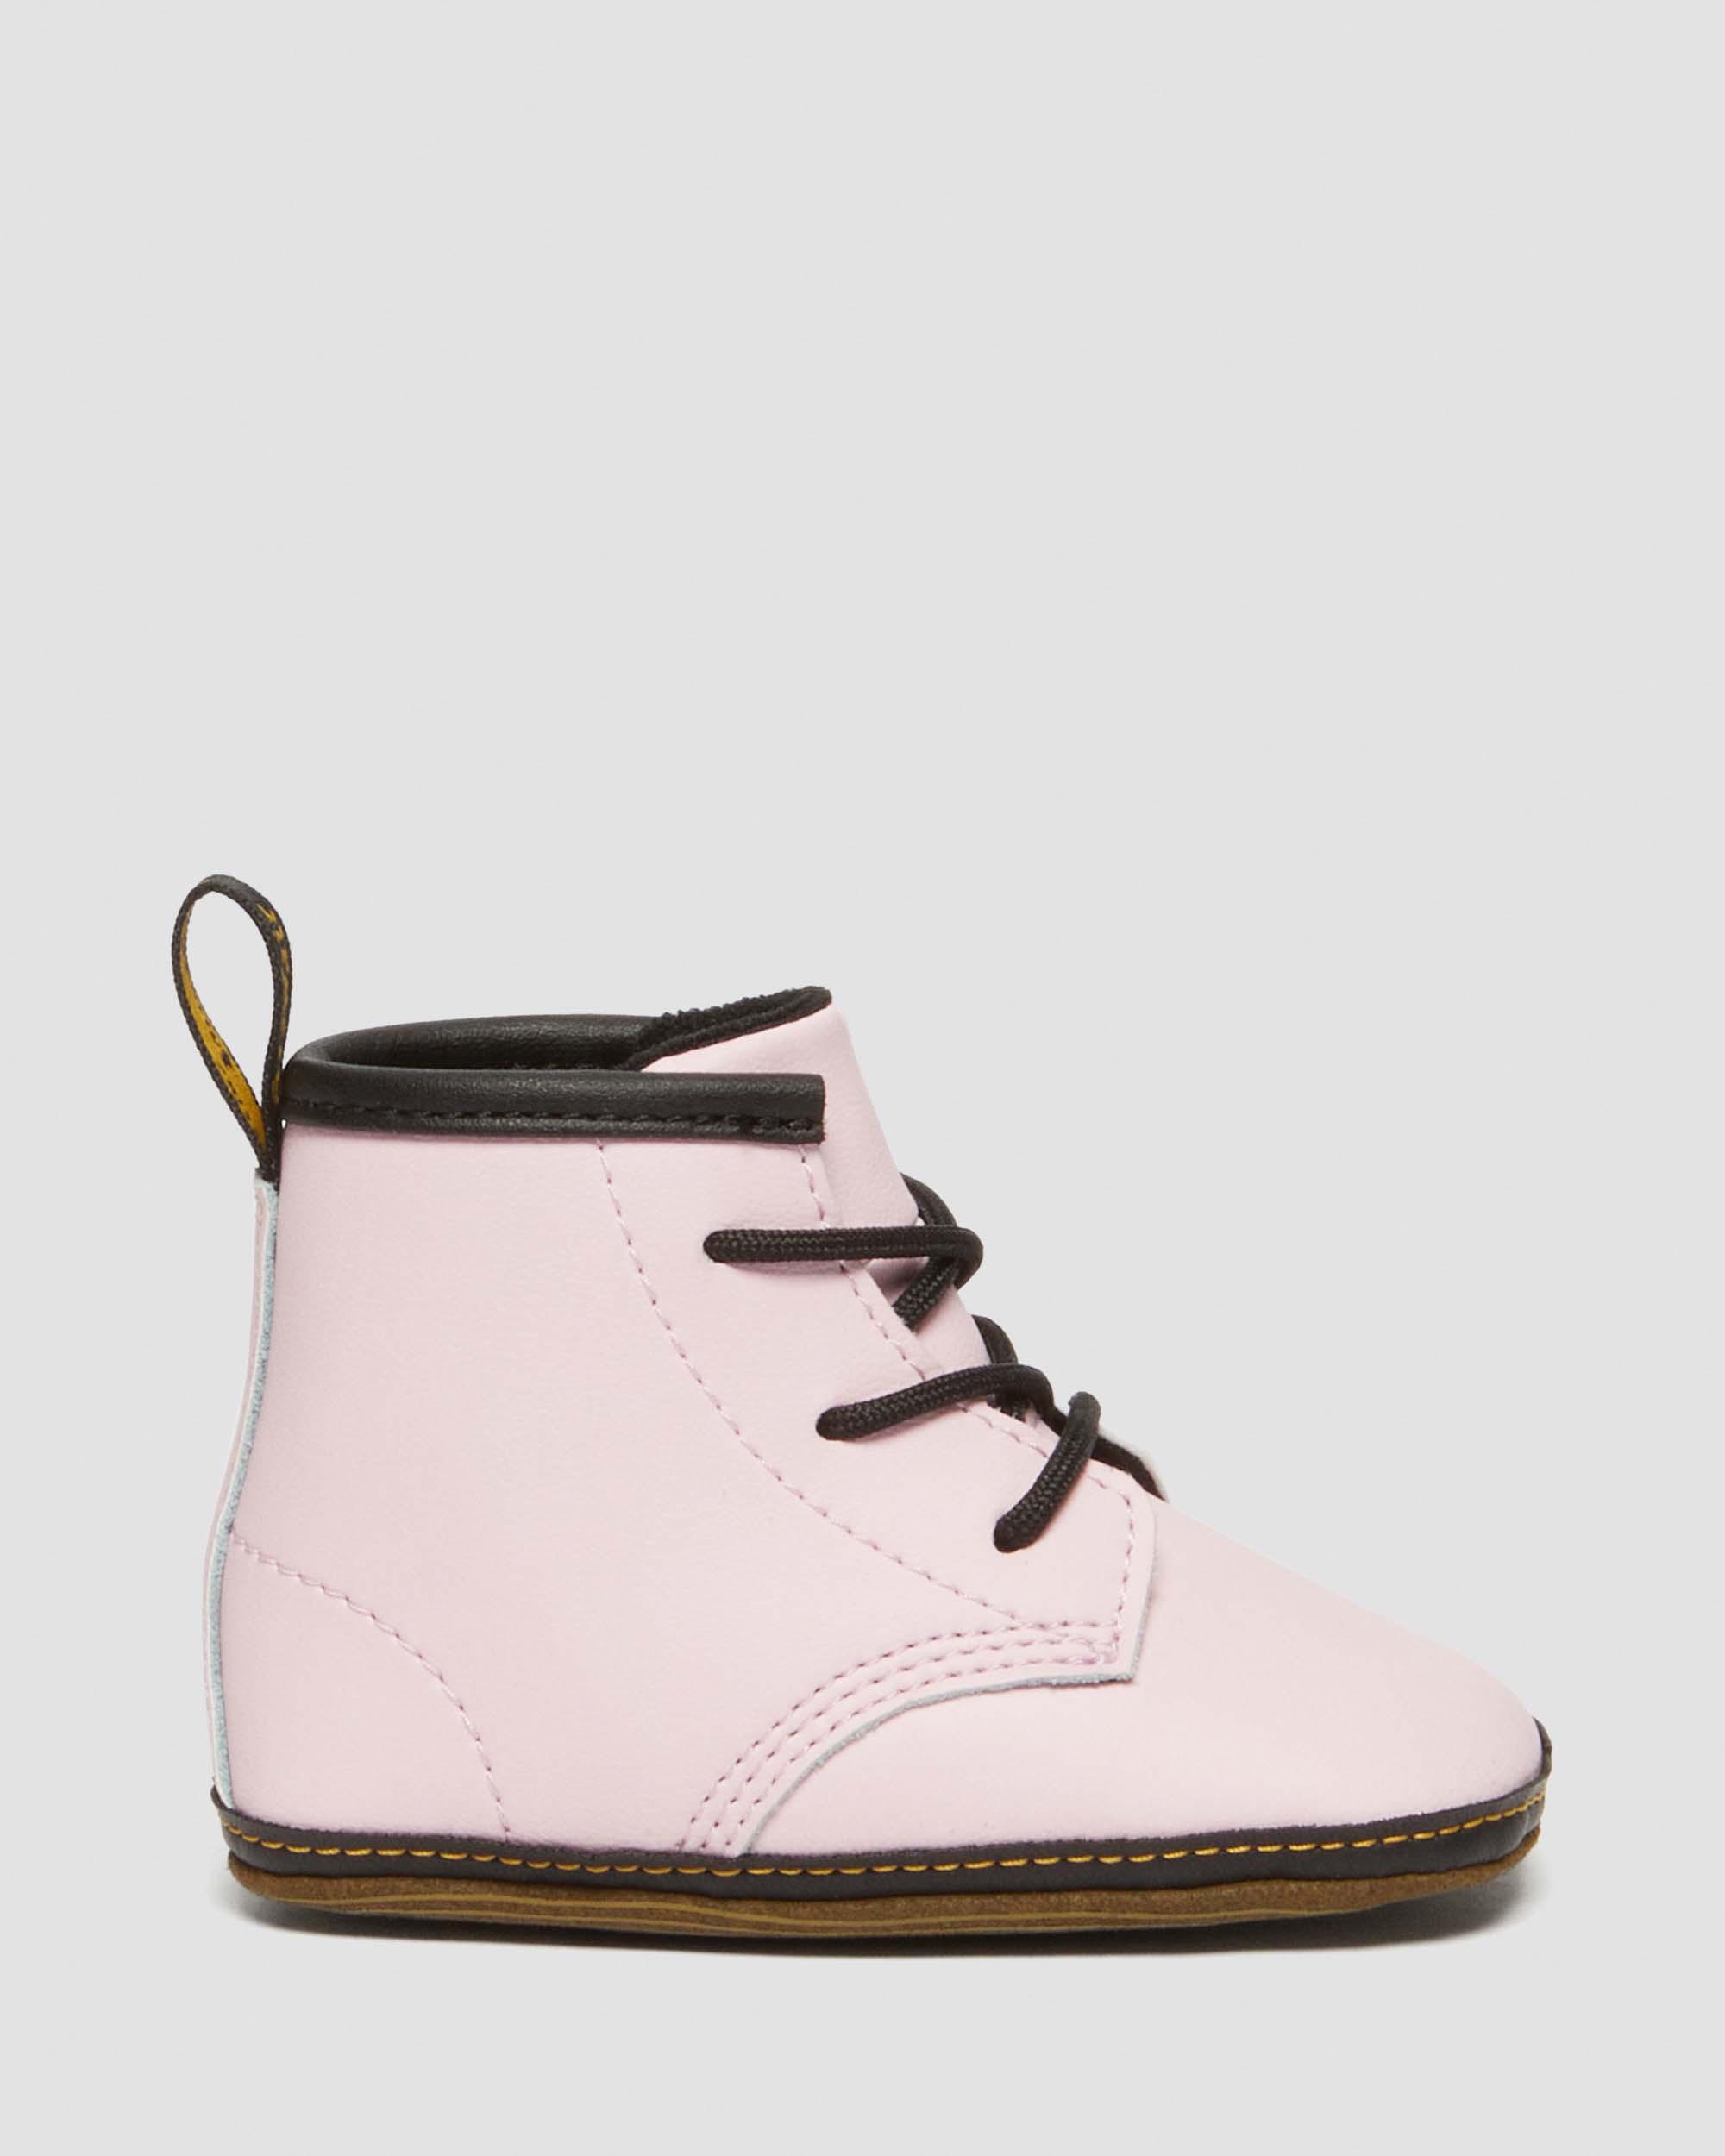 Newborn 1460 Auburn Leather Booties in Pale Pink